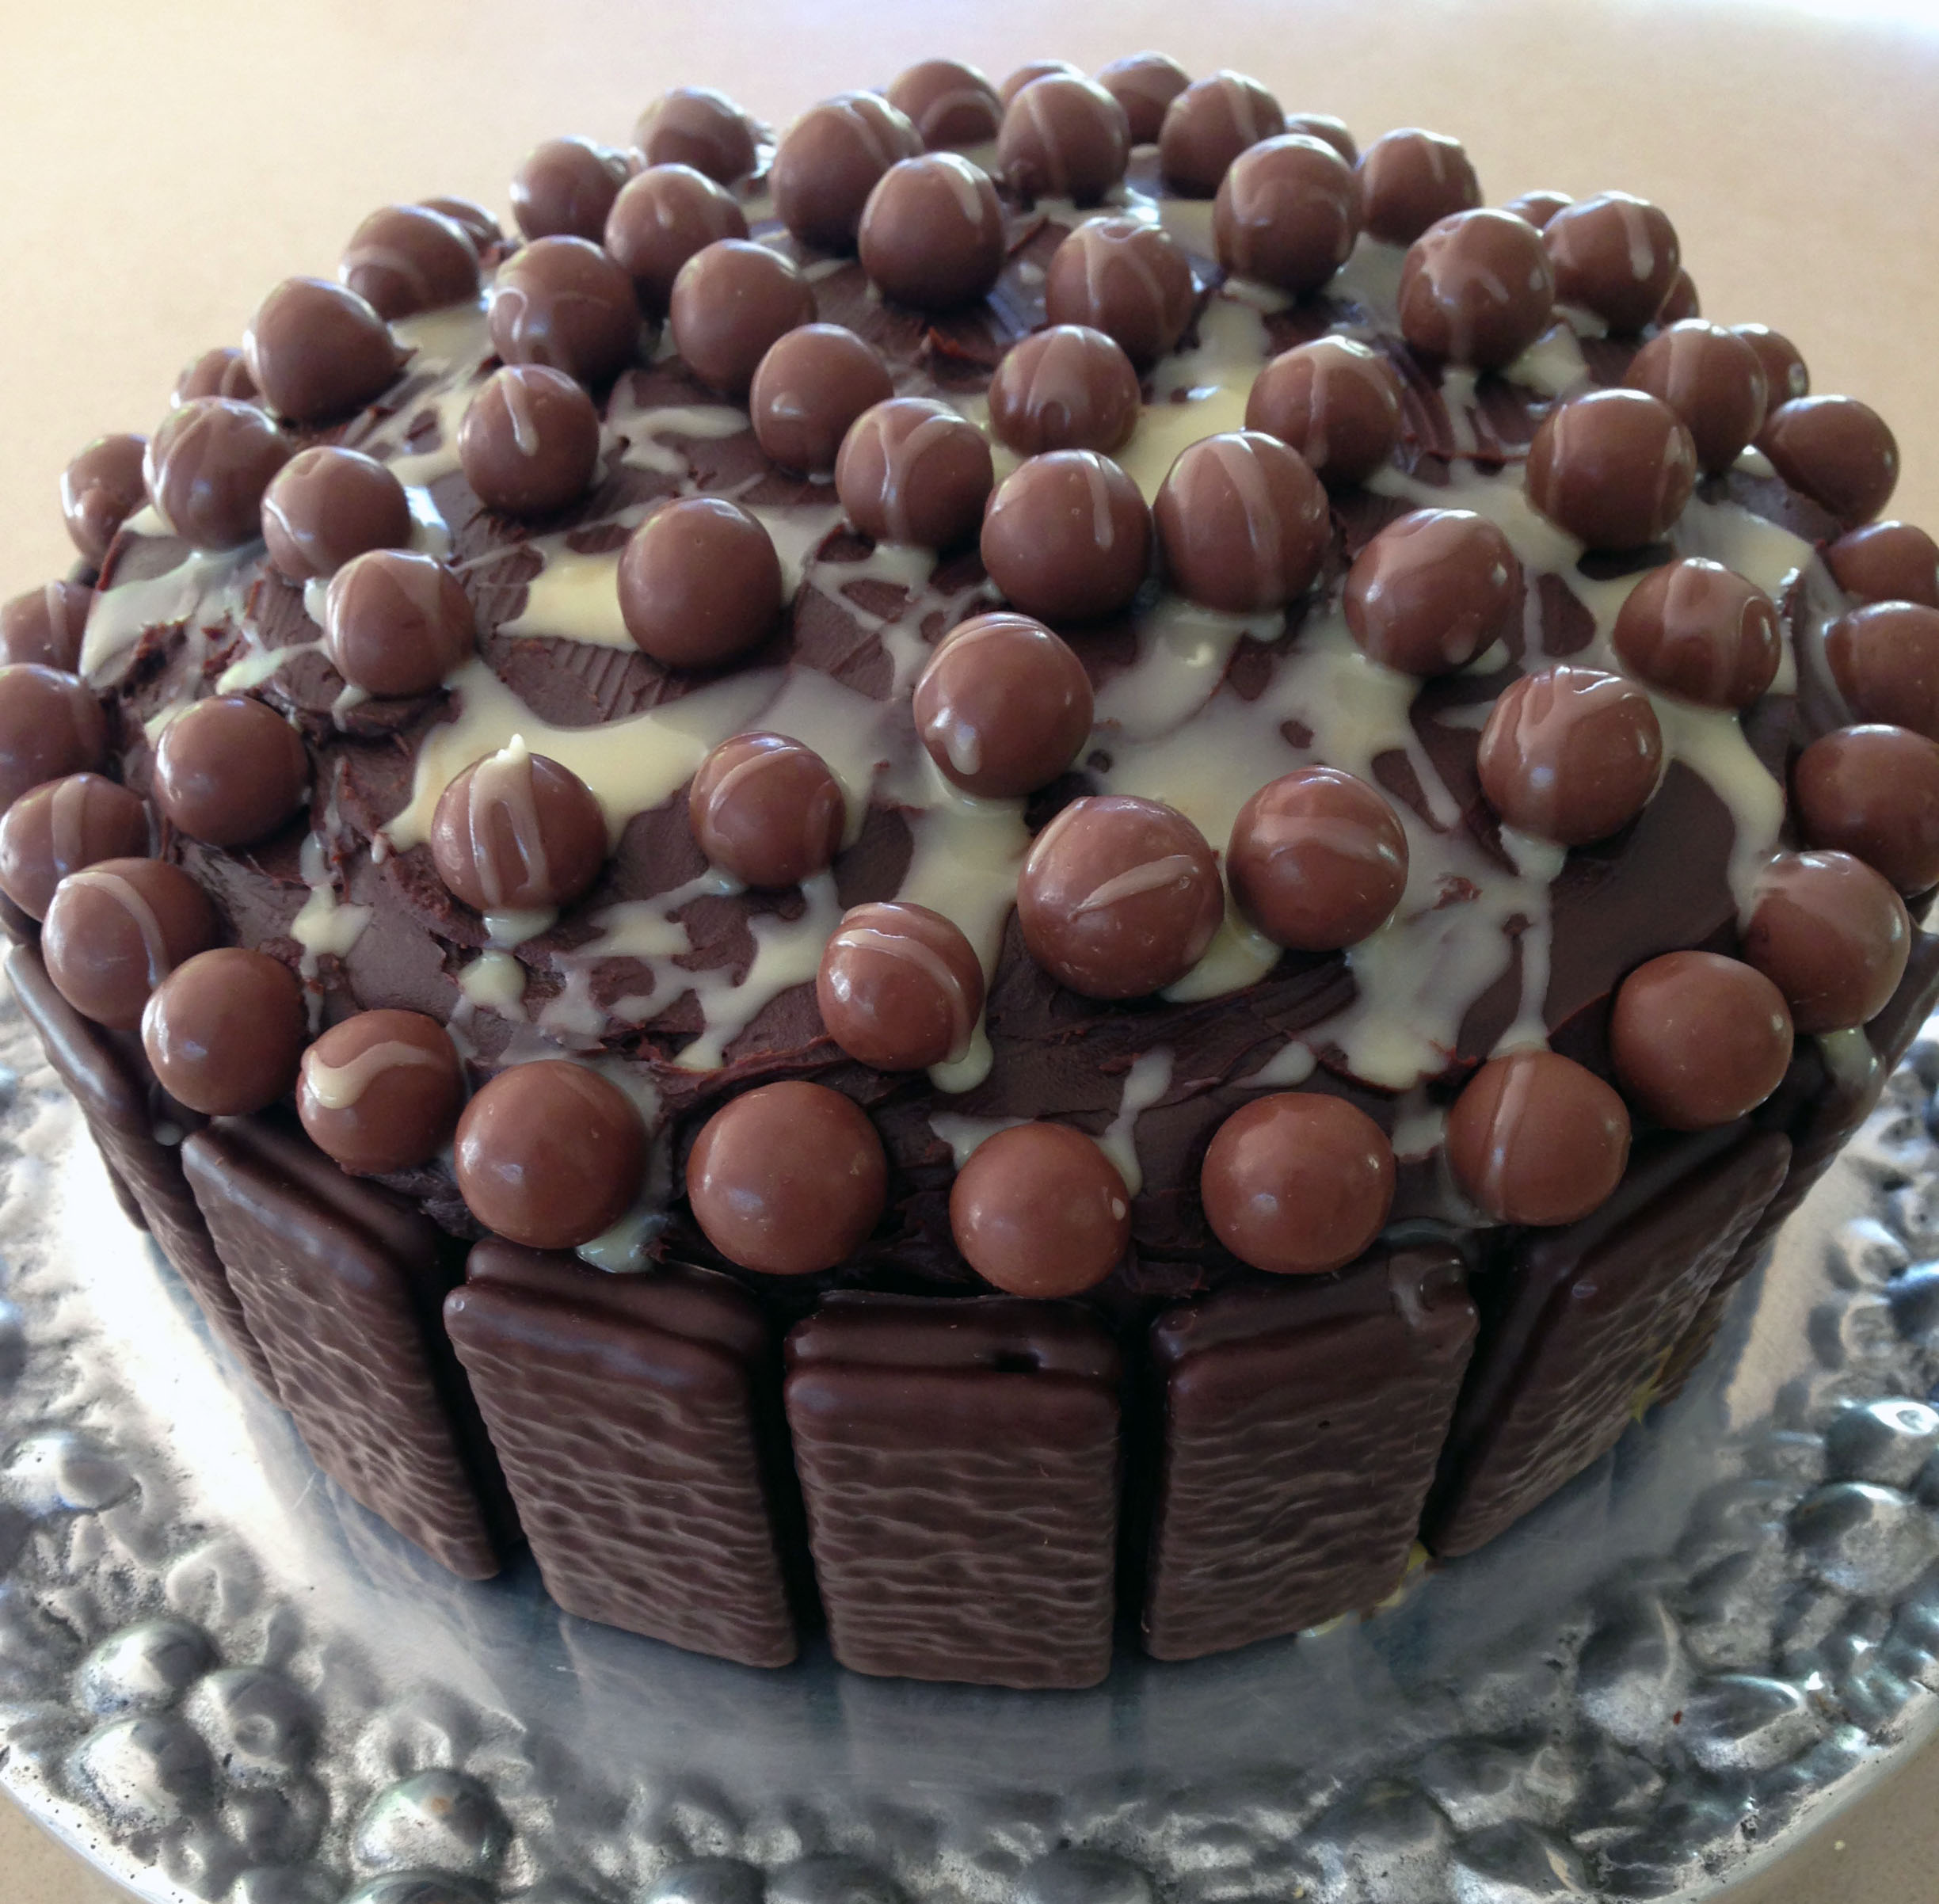 Chocolate Fudge Cake with Tim Tams